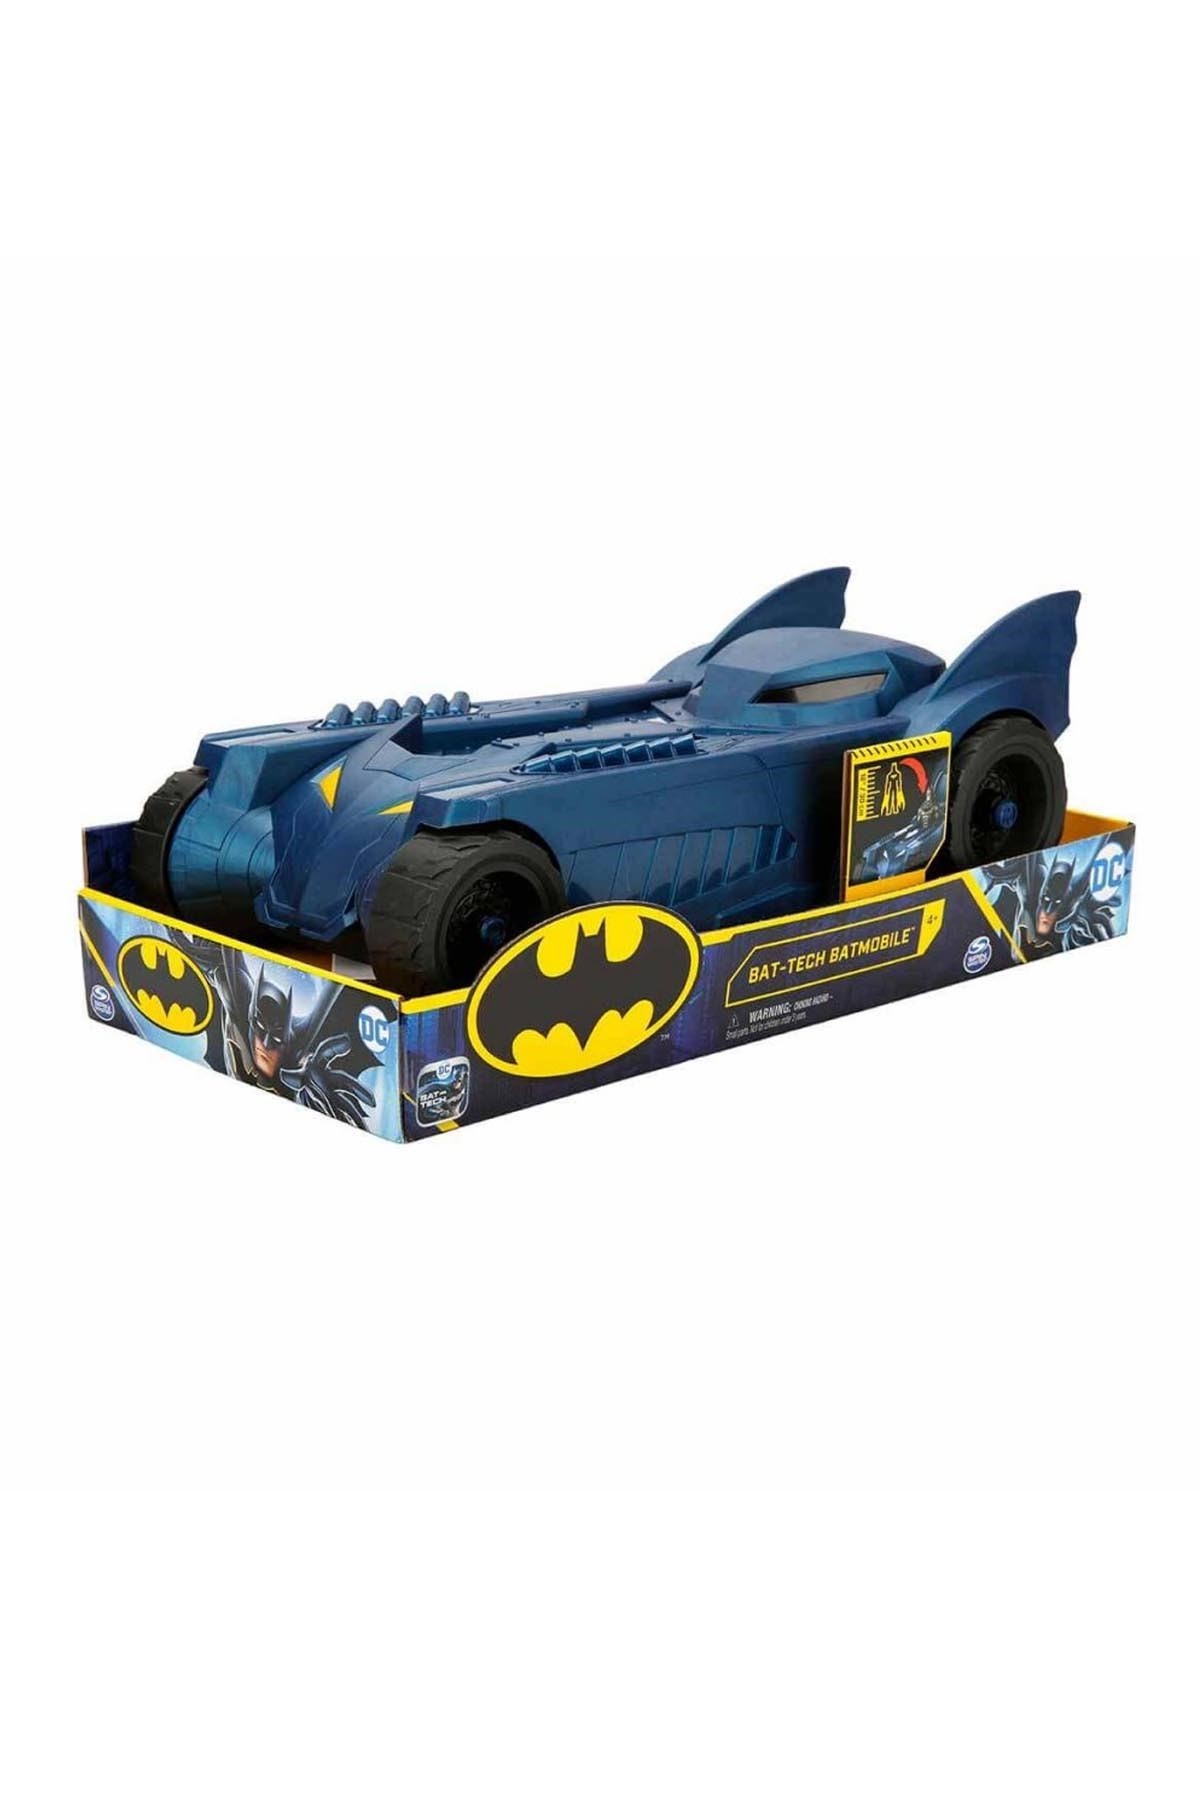 Batman Batmobile Alternative International